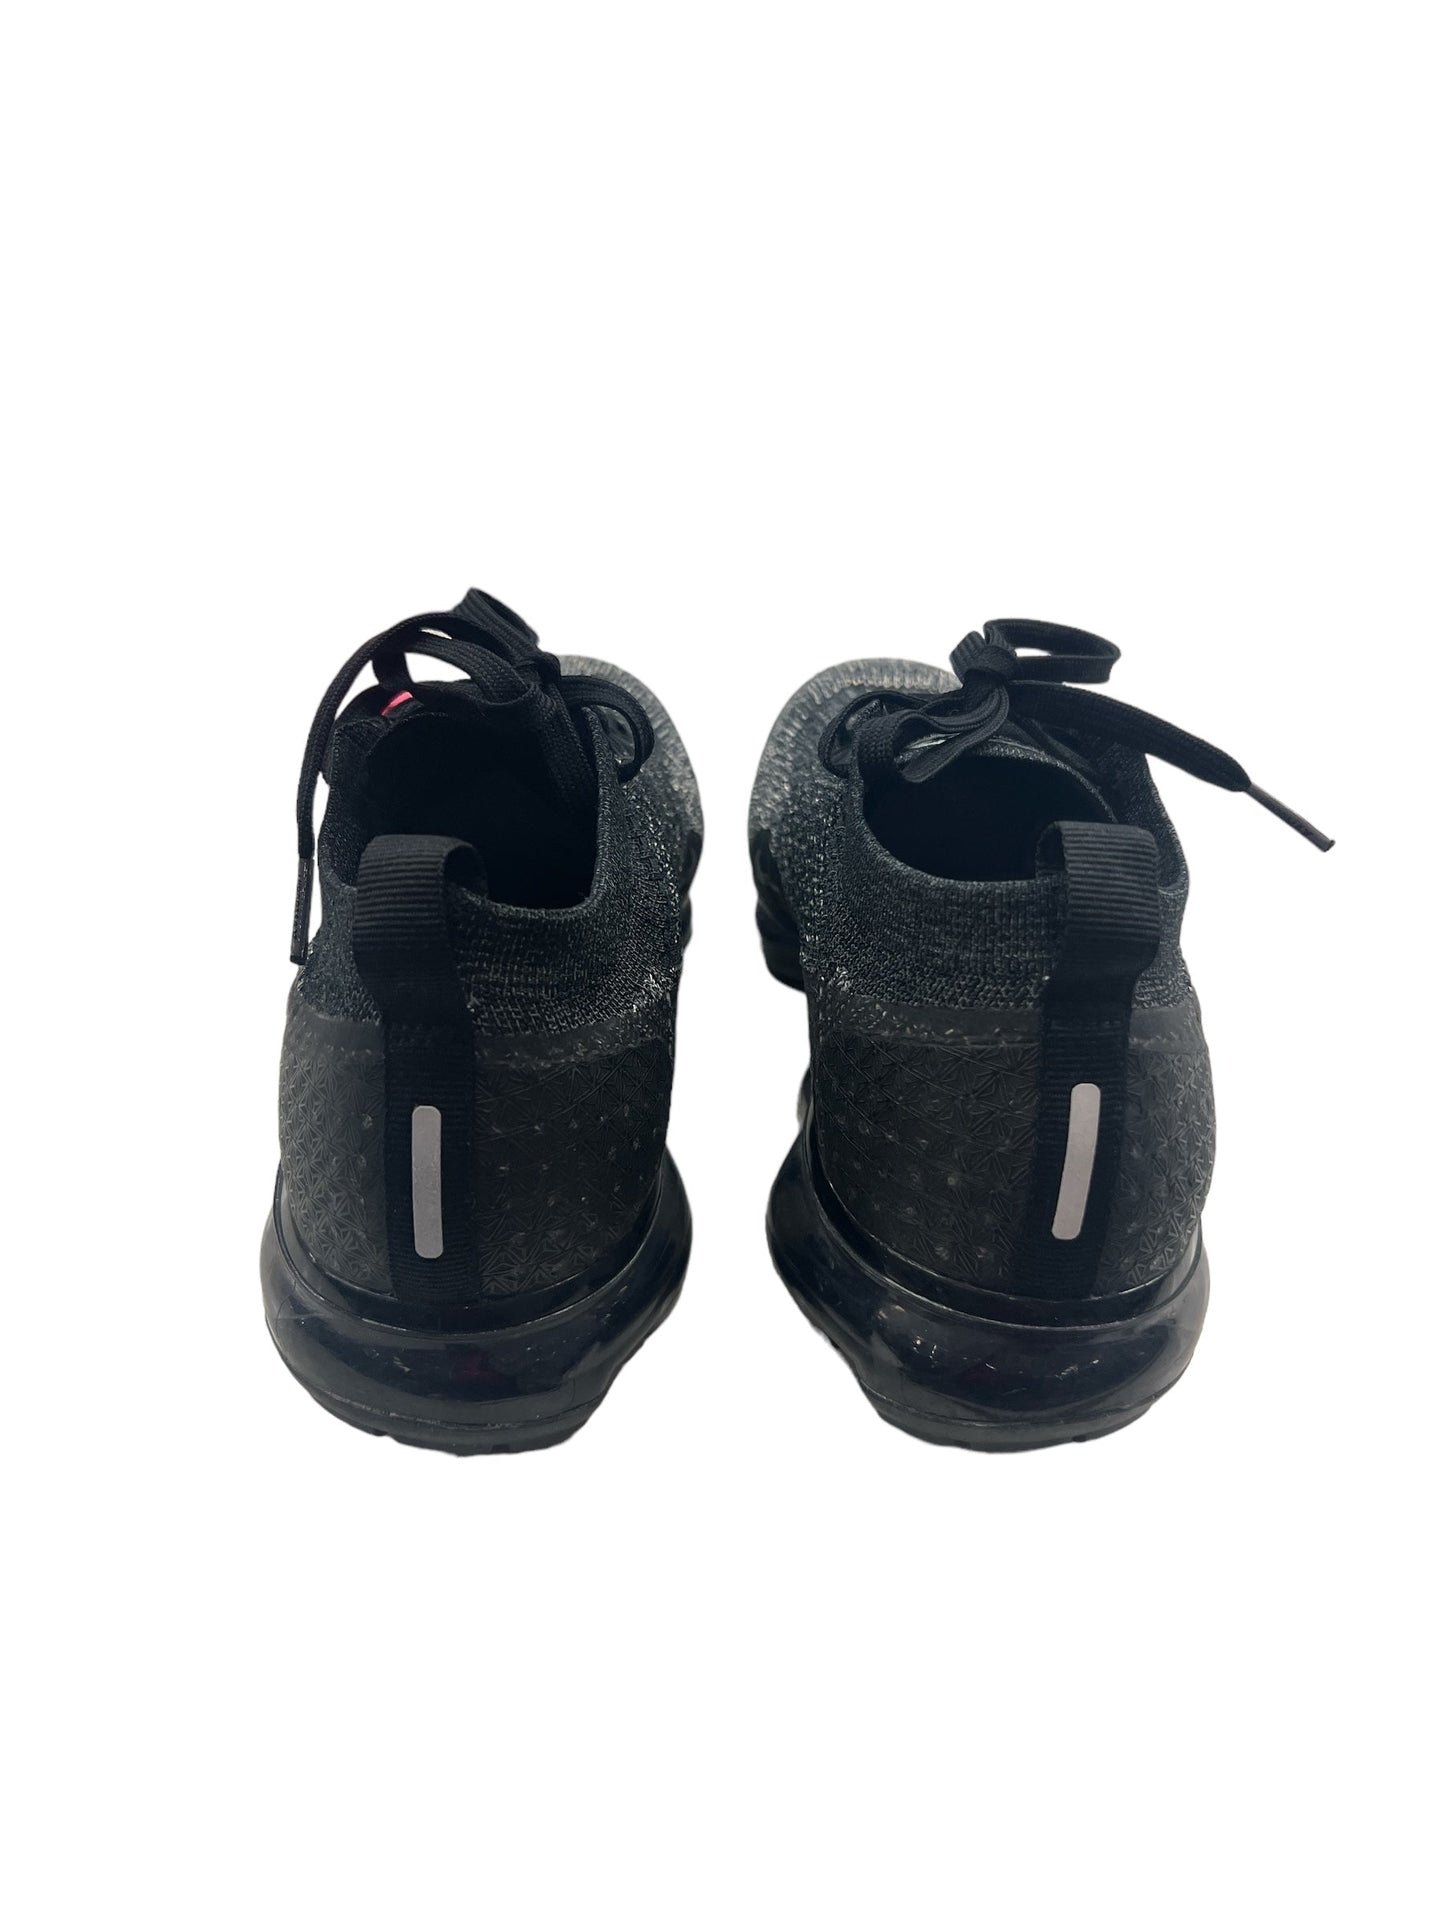 Black Shoes Sneakers Nike